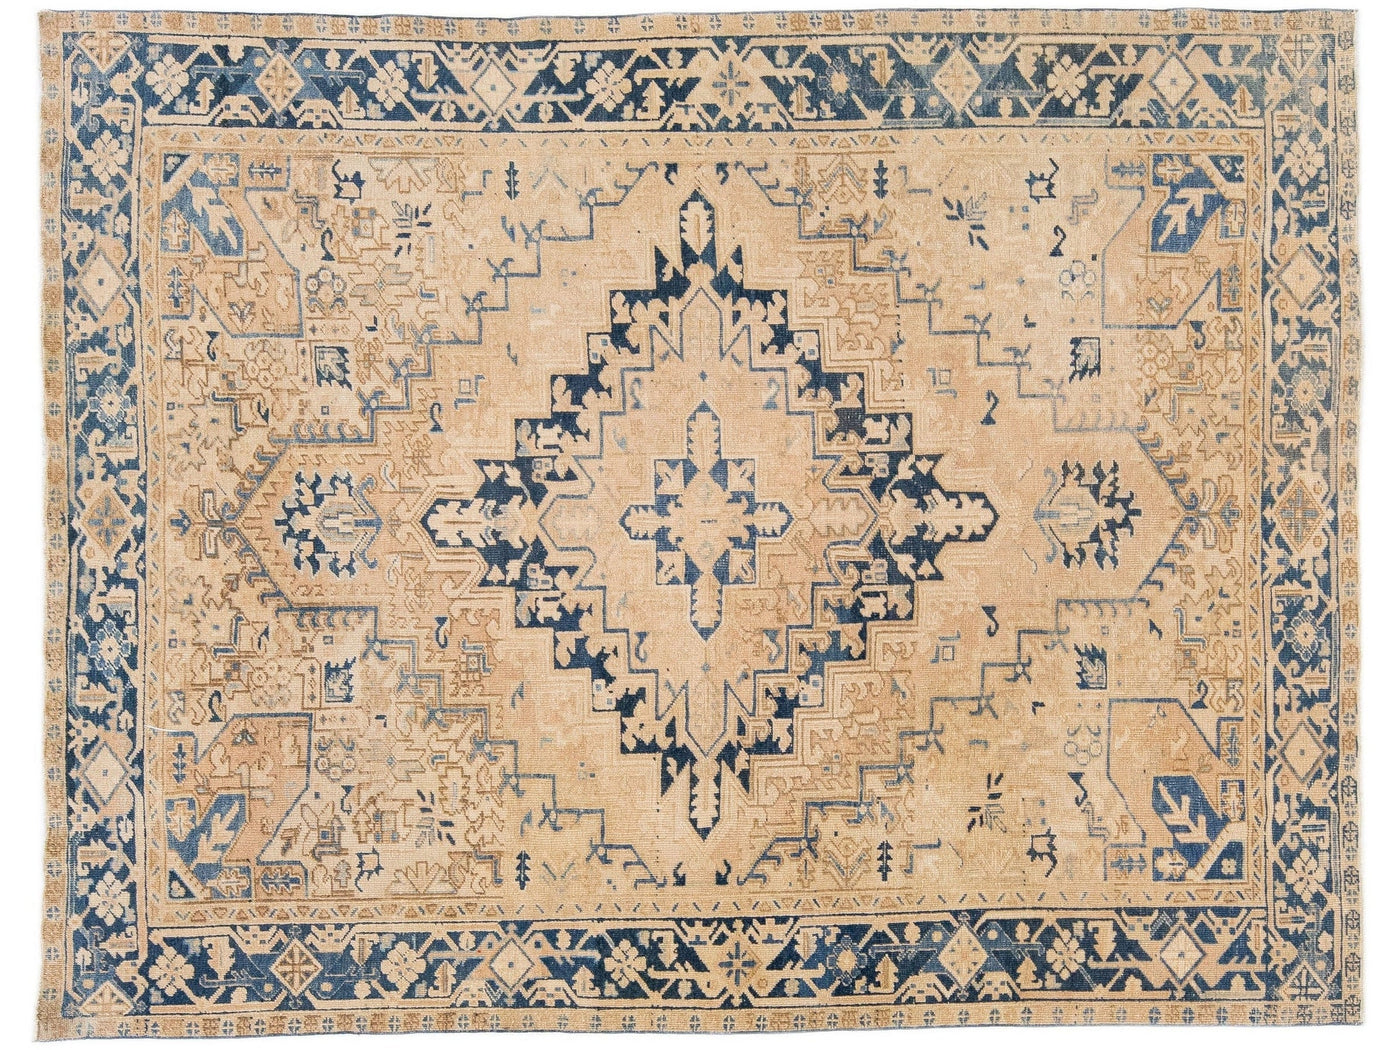 Tan Antique Persian Heriz Handmade Wool Rug with Medallion Design